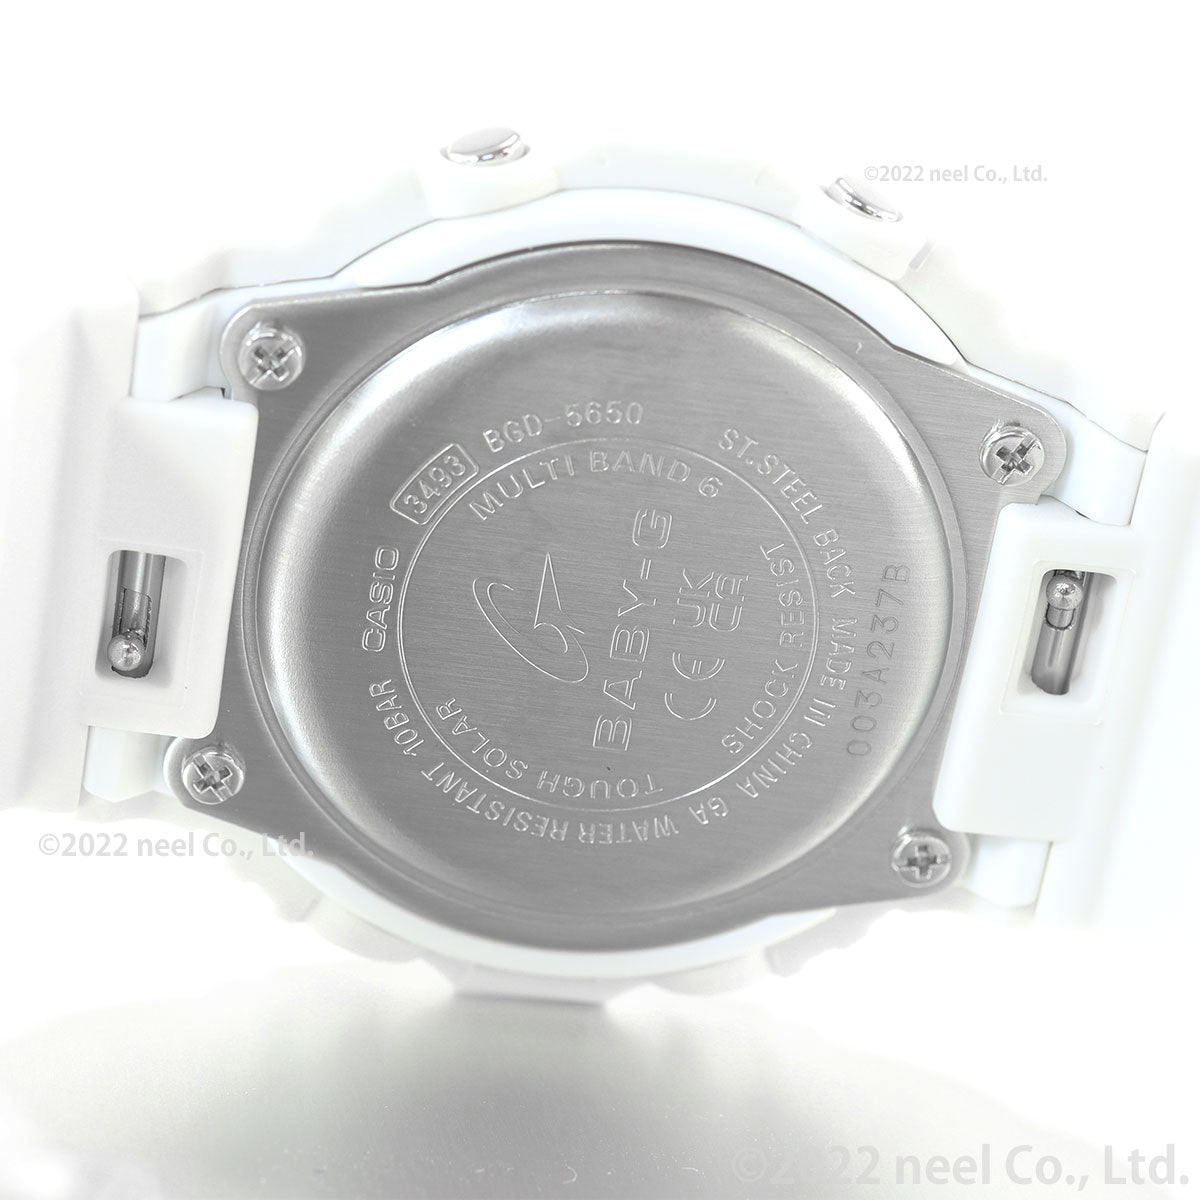 BABY-G カシオ ベビーG レディース 電波 ソーラー 腕時計 タフソーラー ホワイト BGD-5650-7JF